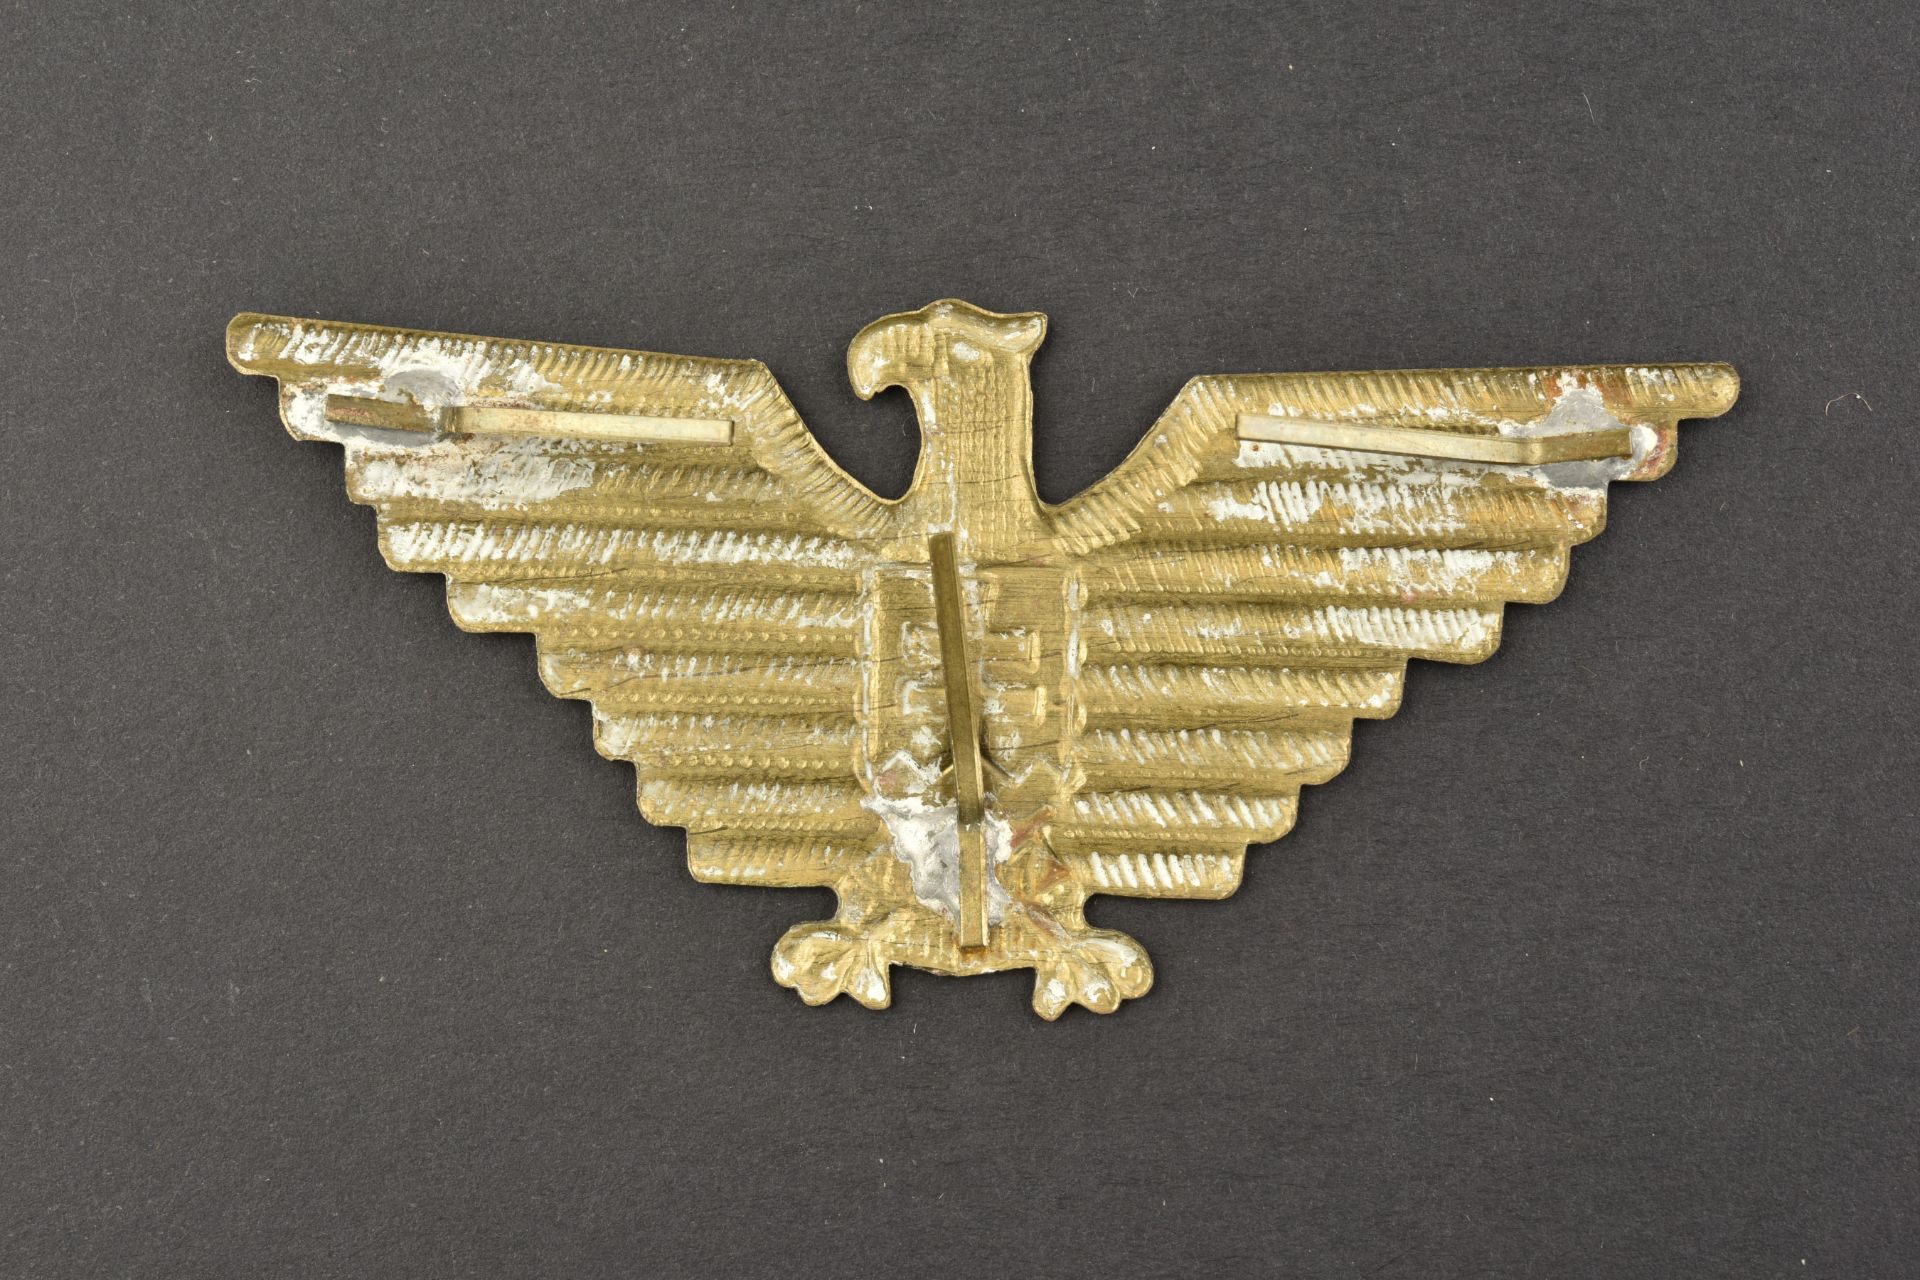 Aigle de coiffure slovaque. Slovak headdress eagle. - Image 2 of 2